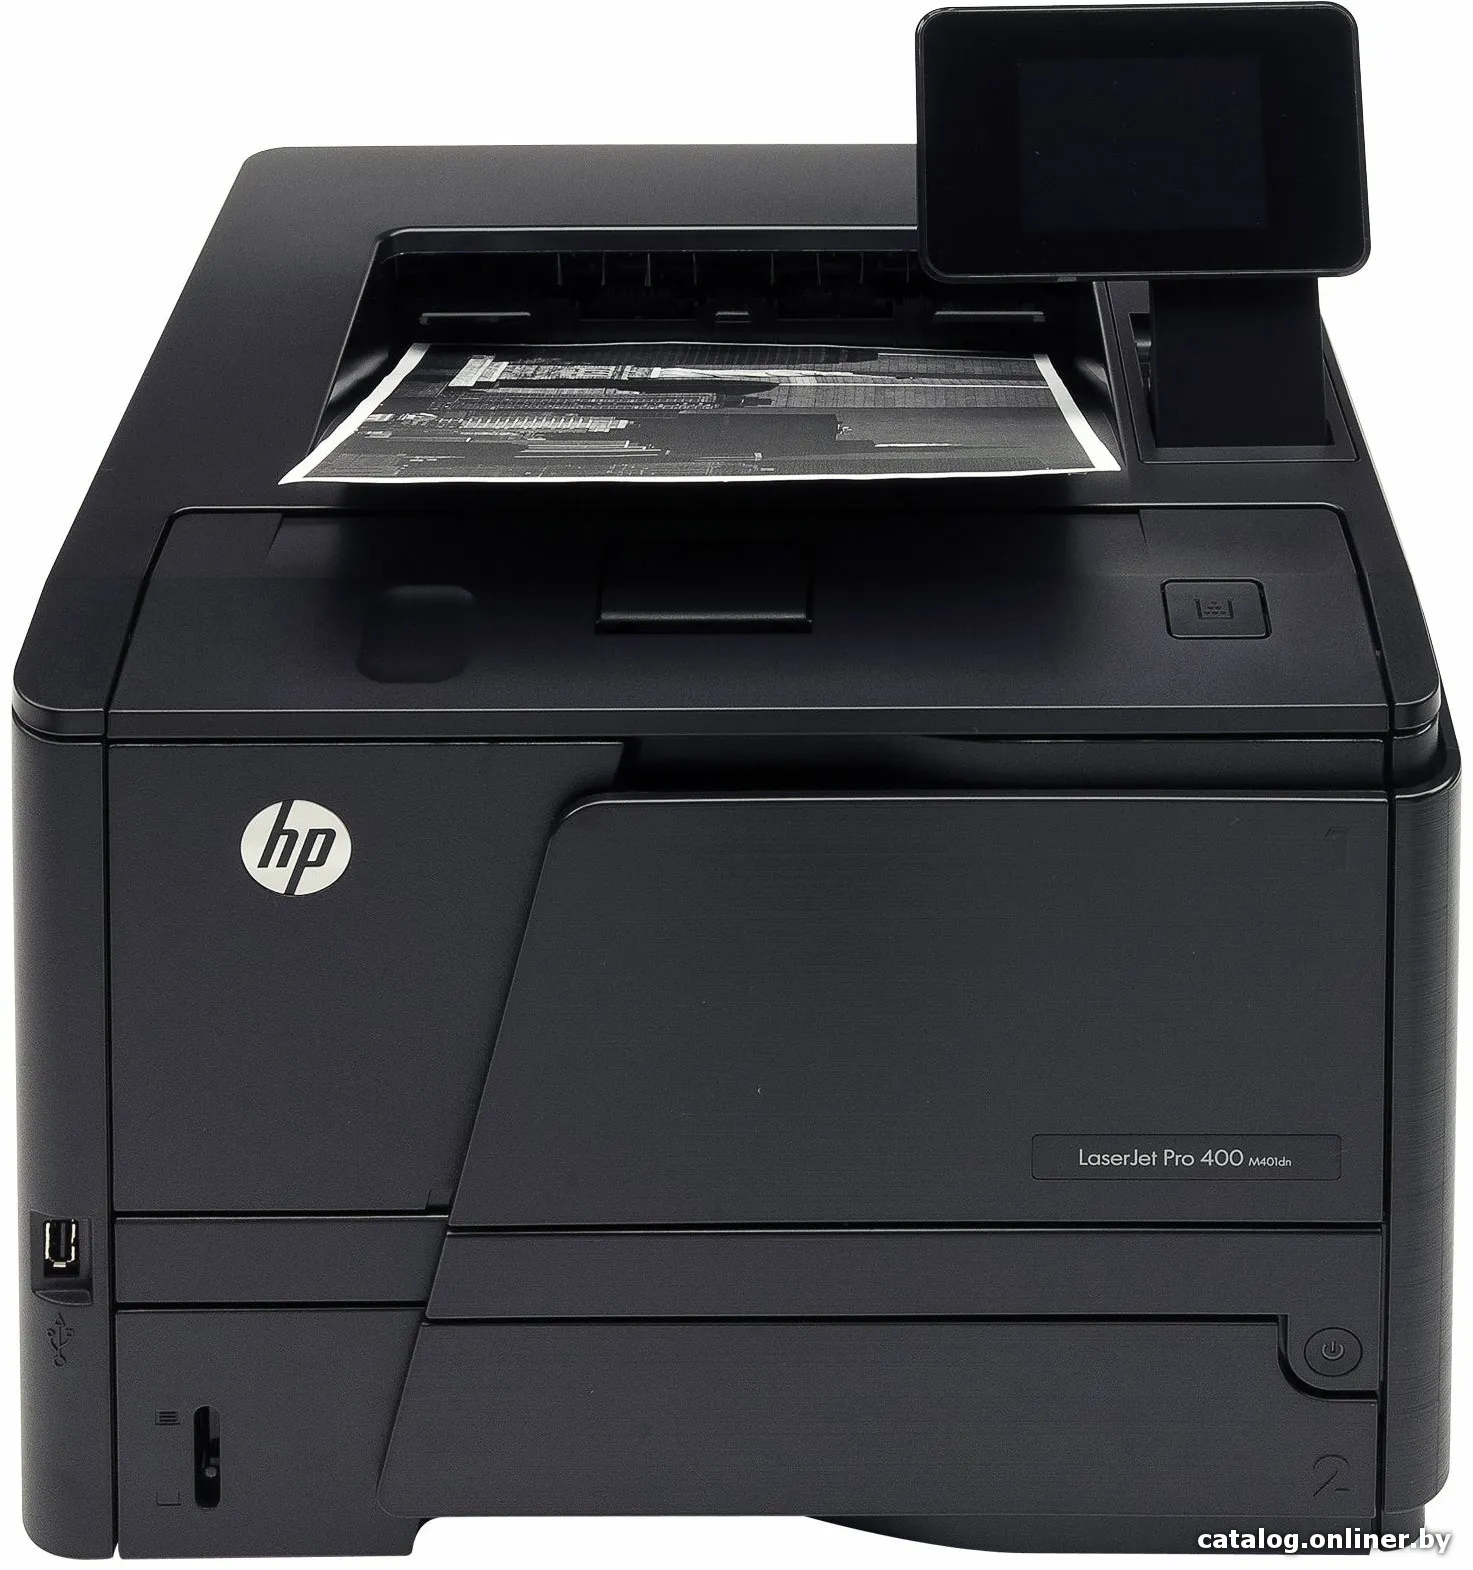 Принтер HP LaserJet Pro 400 M401dn Printer (CF278A)#3